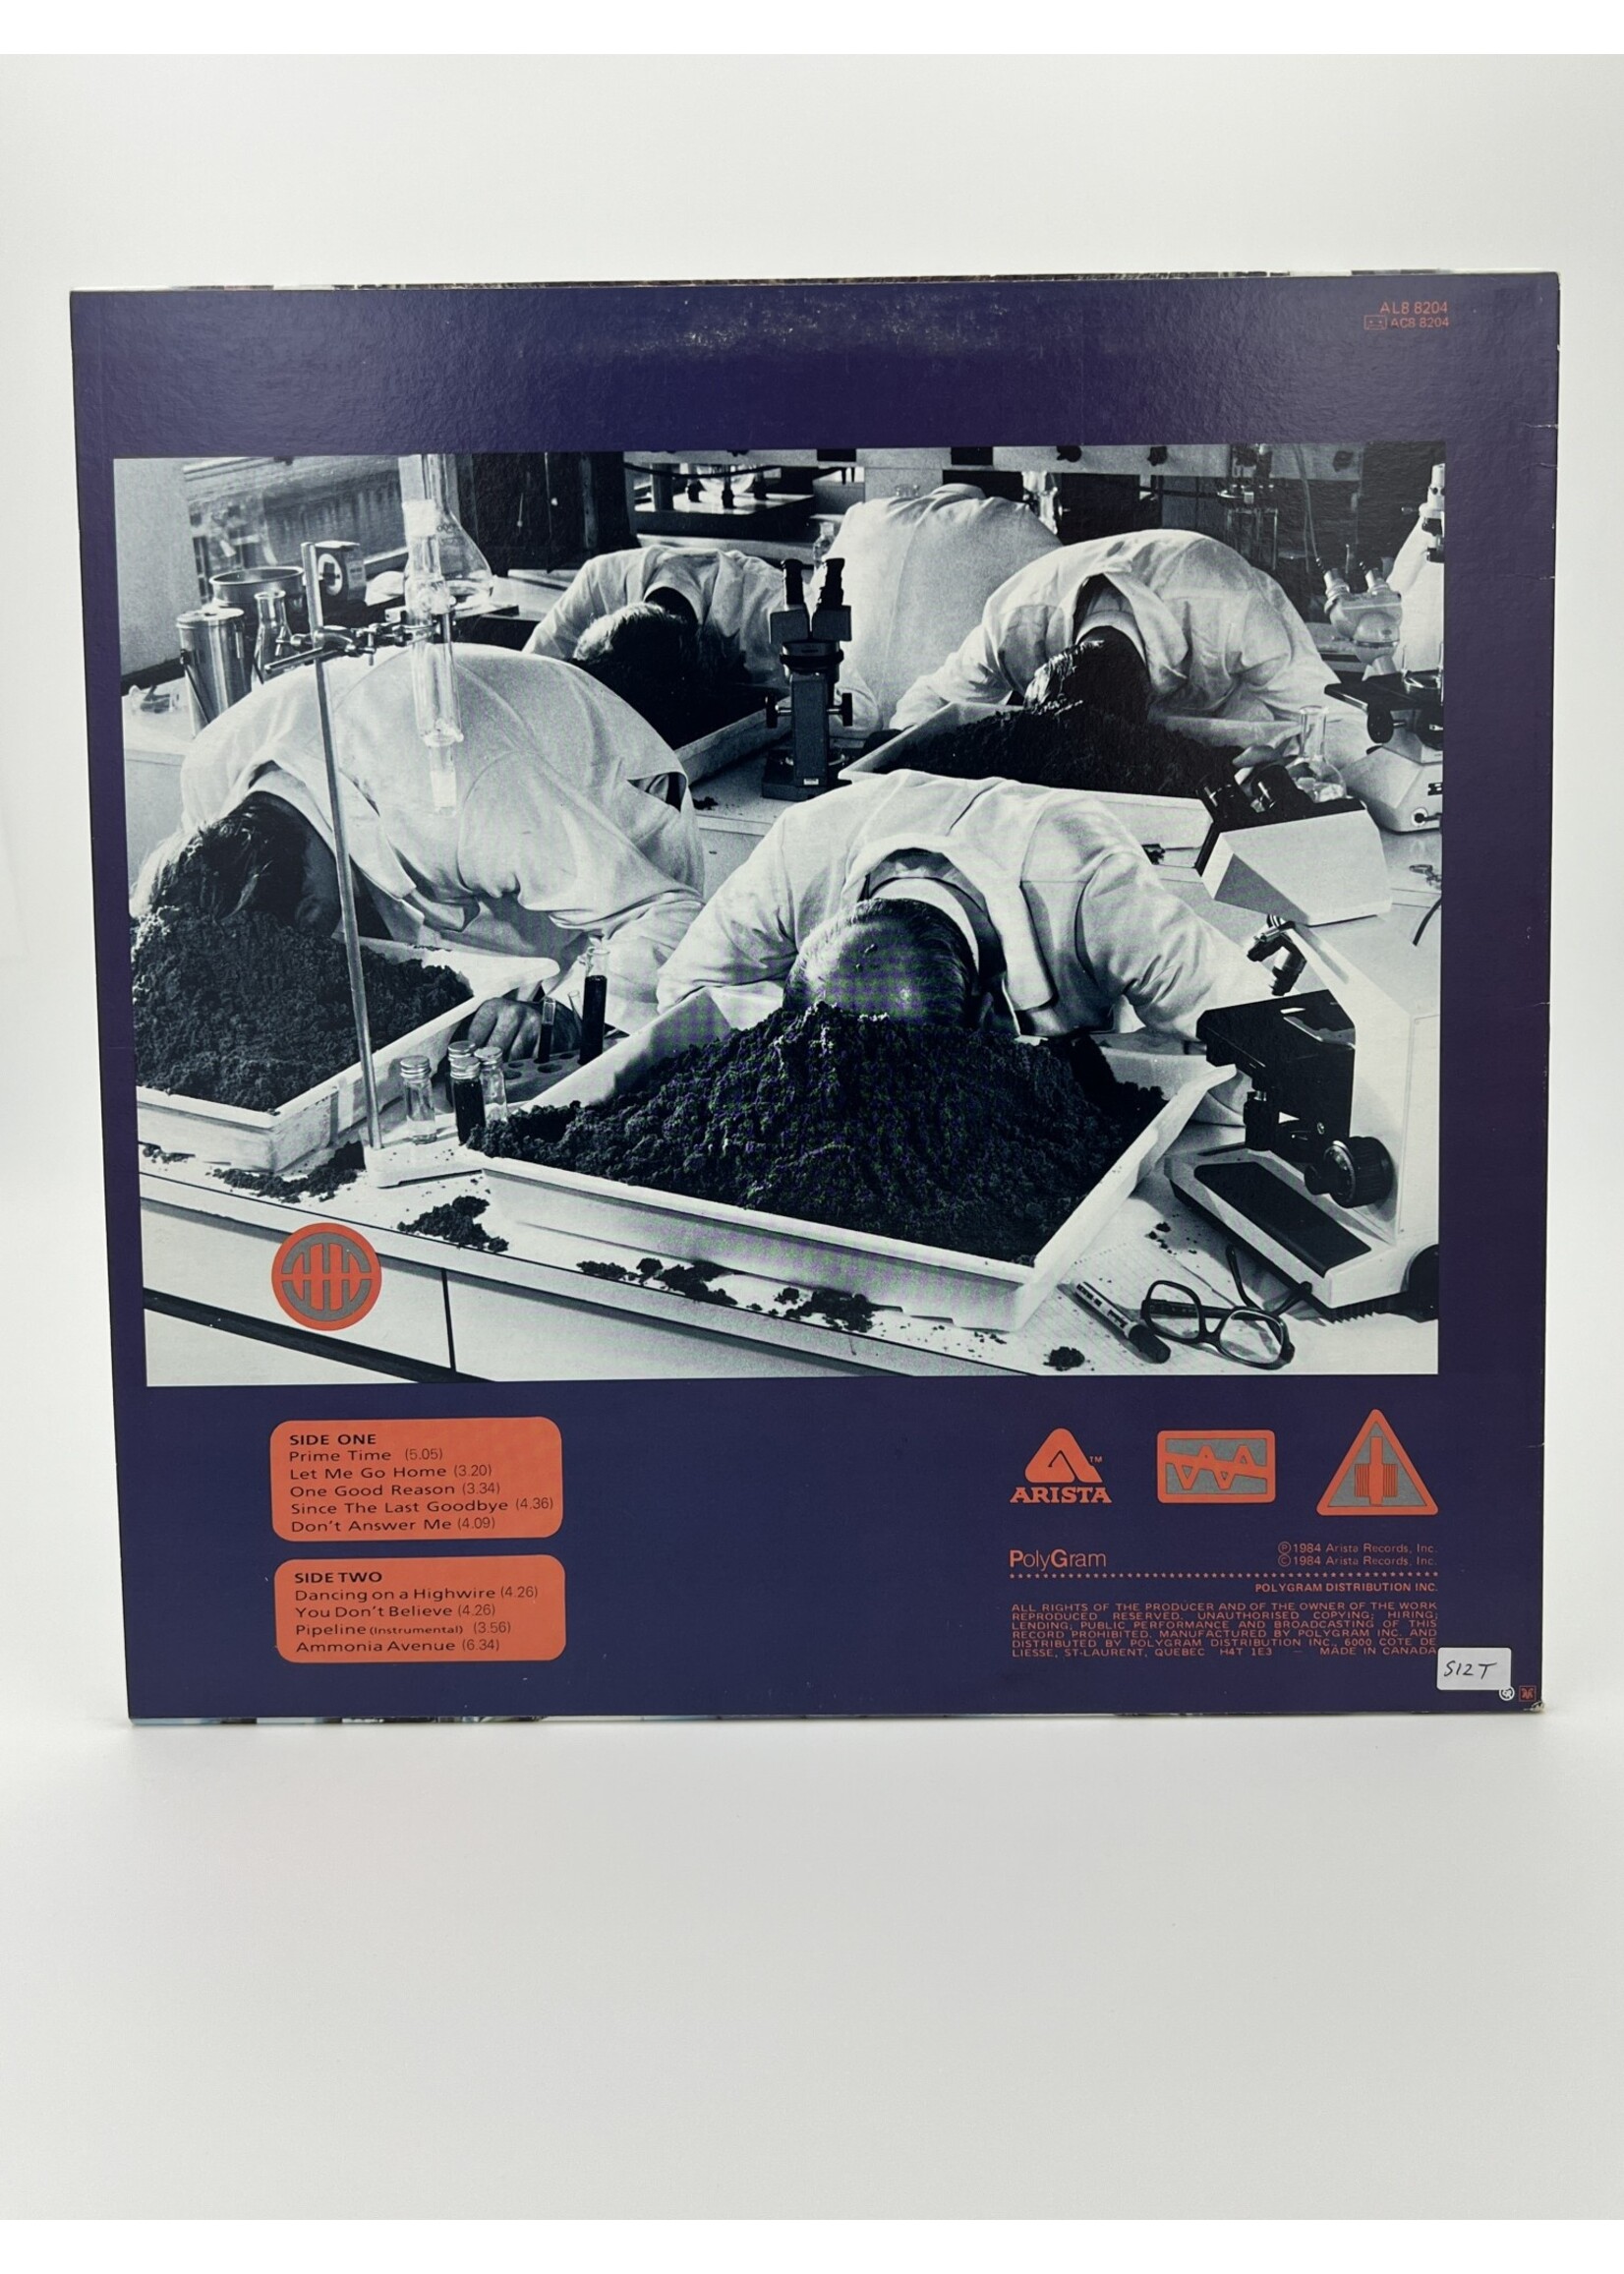 LP   The Alan Parsons Project Ammonia Avenue LP Record